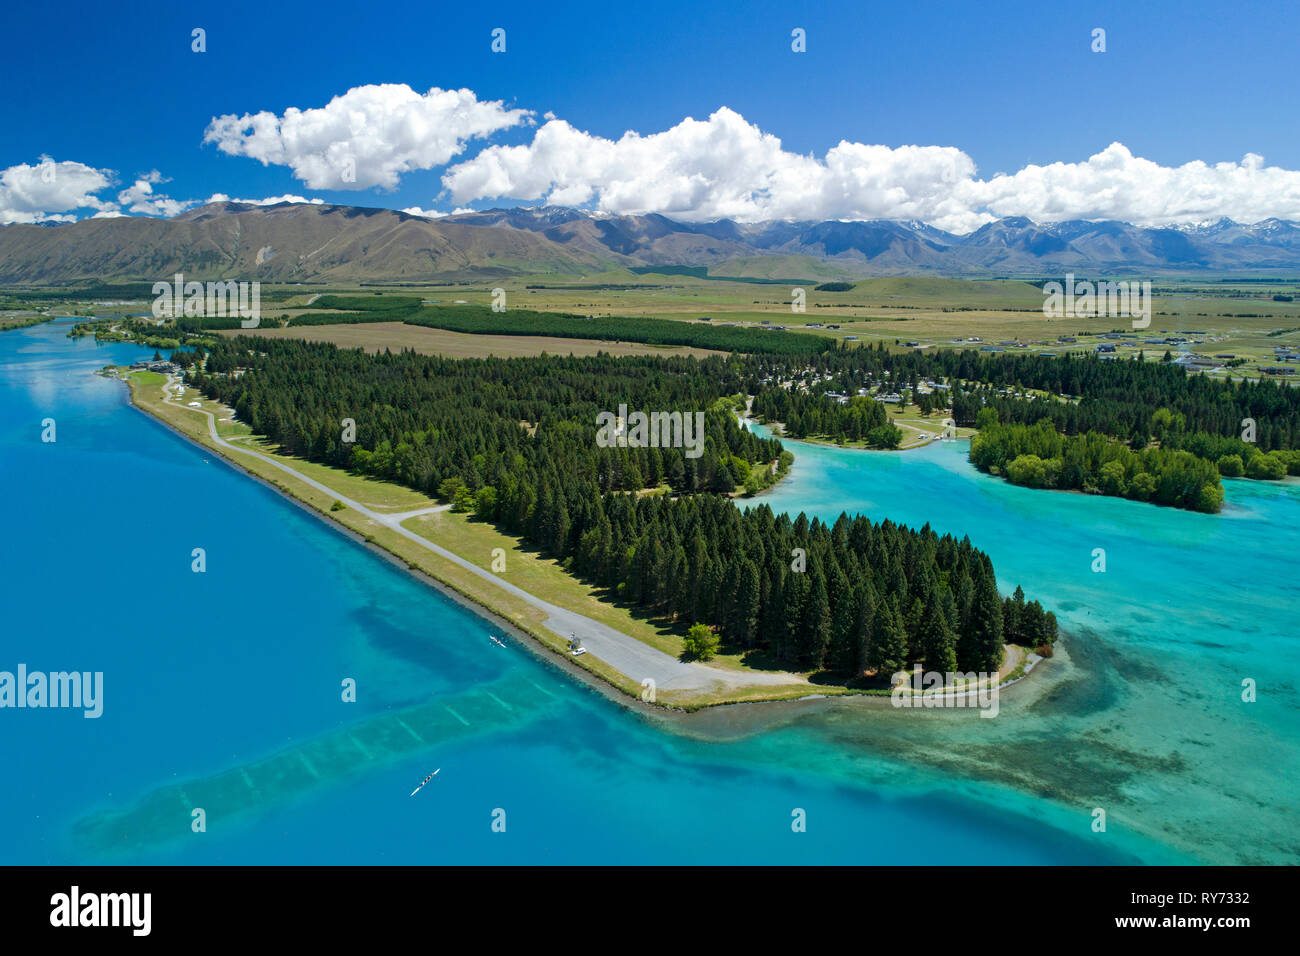 Lake Ruataniwha, and Ruataniwha Rowing Course, Mackenzie Country, South Island, New Zealand - aerial Stock Photo